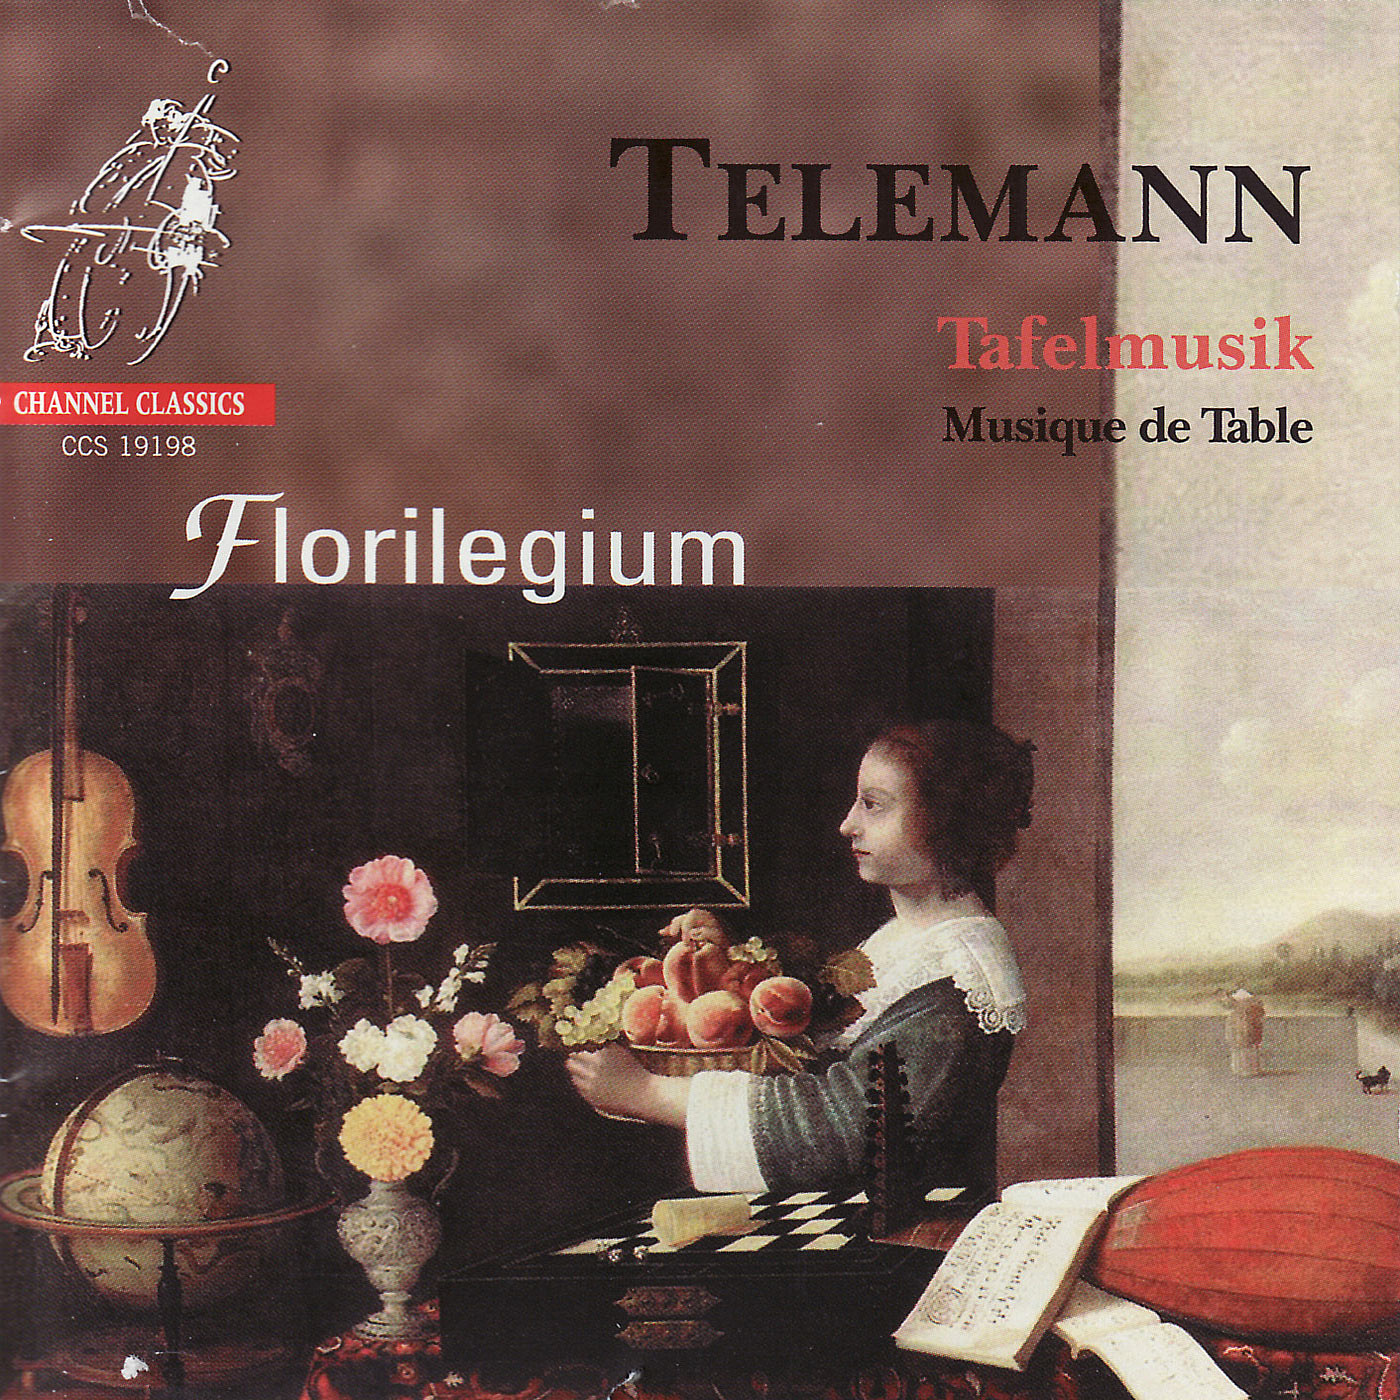 Florilegium, Walter van Hauwe - G. PH. Telemann Tafelmusik (2007/2017) [FLAC 24bit/192kHz]